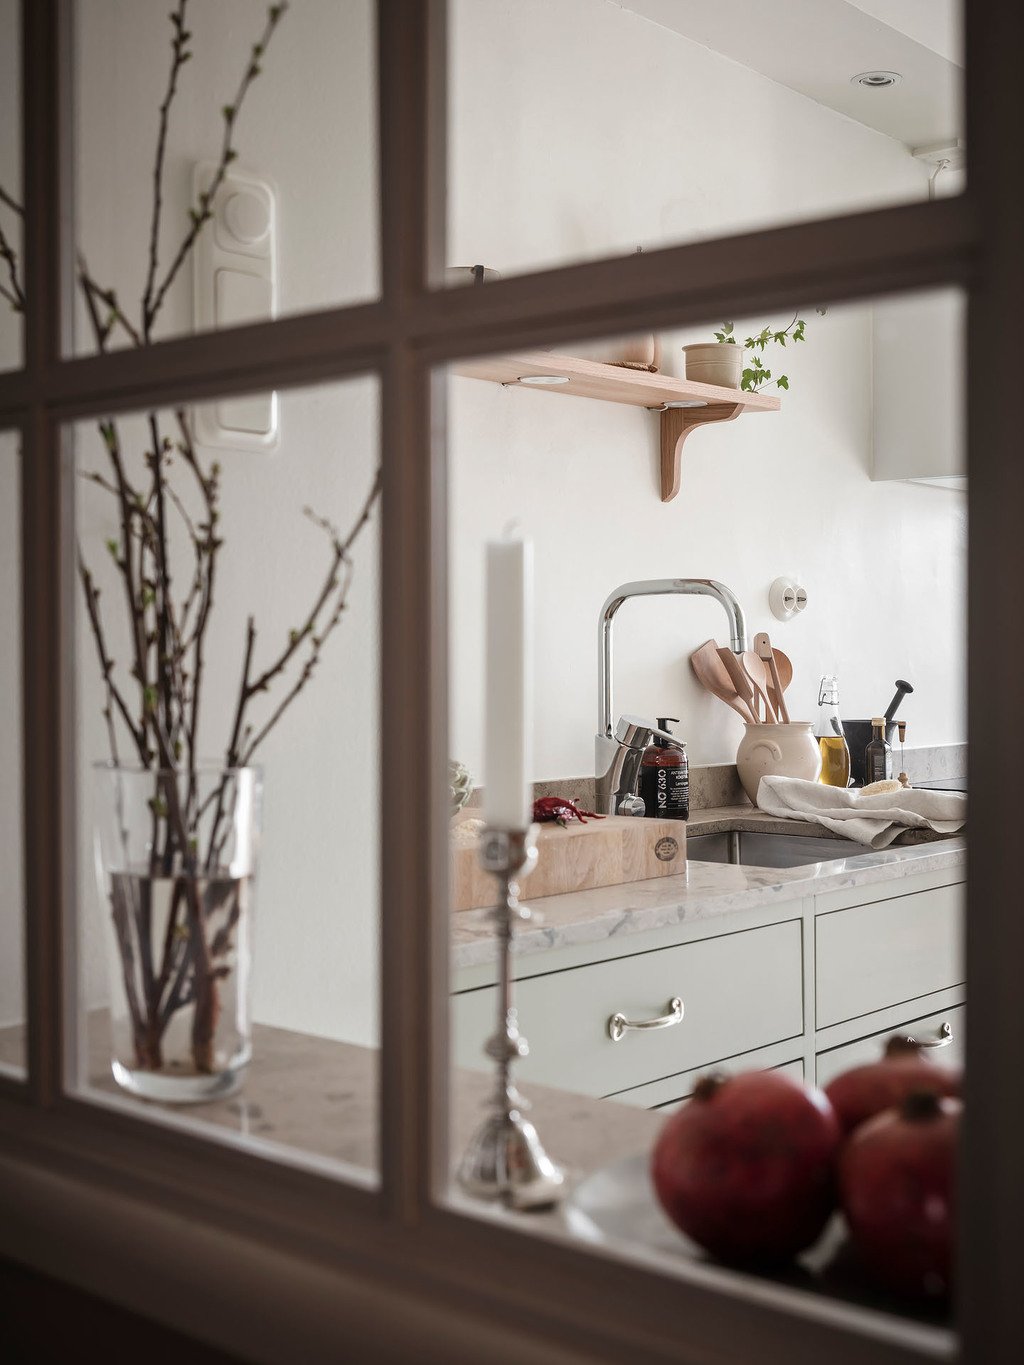 arredamento cucina piccola moderna - chiccacasa - vista di una piccola cucina dalla finestra interna